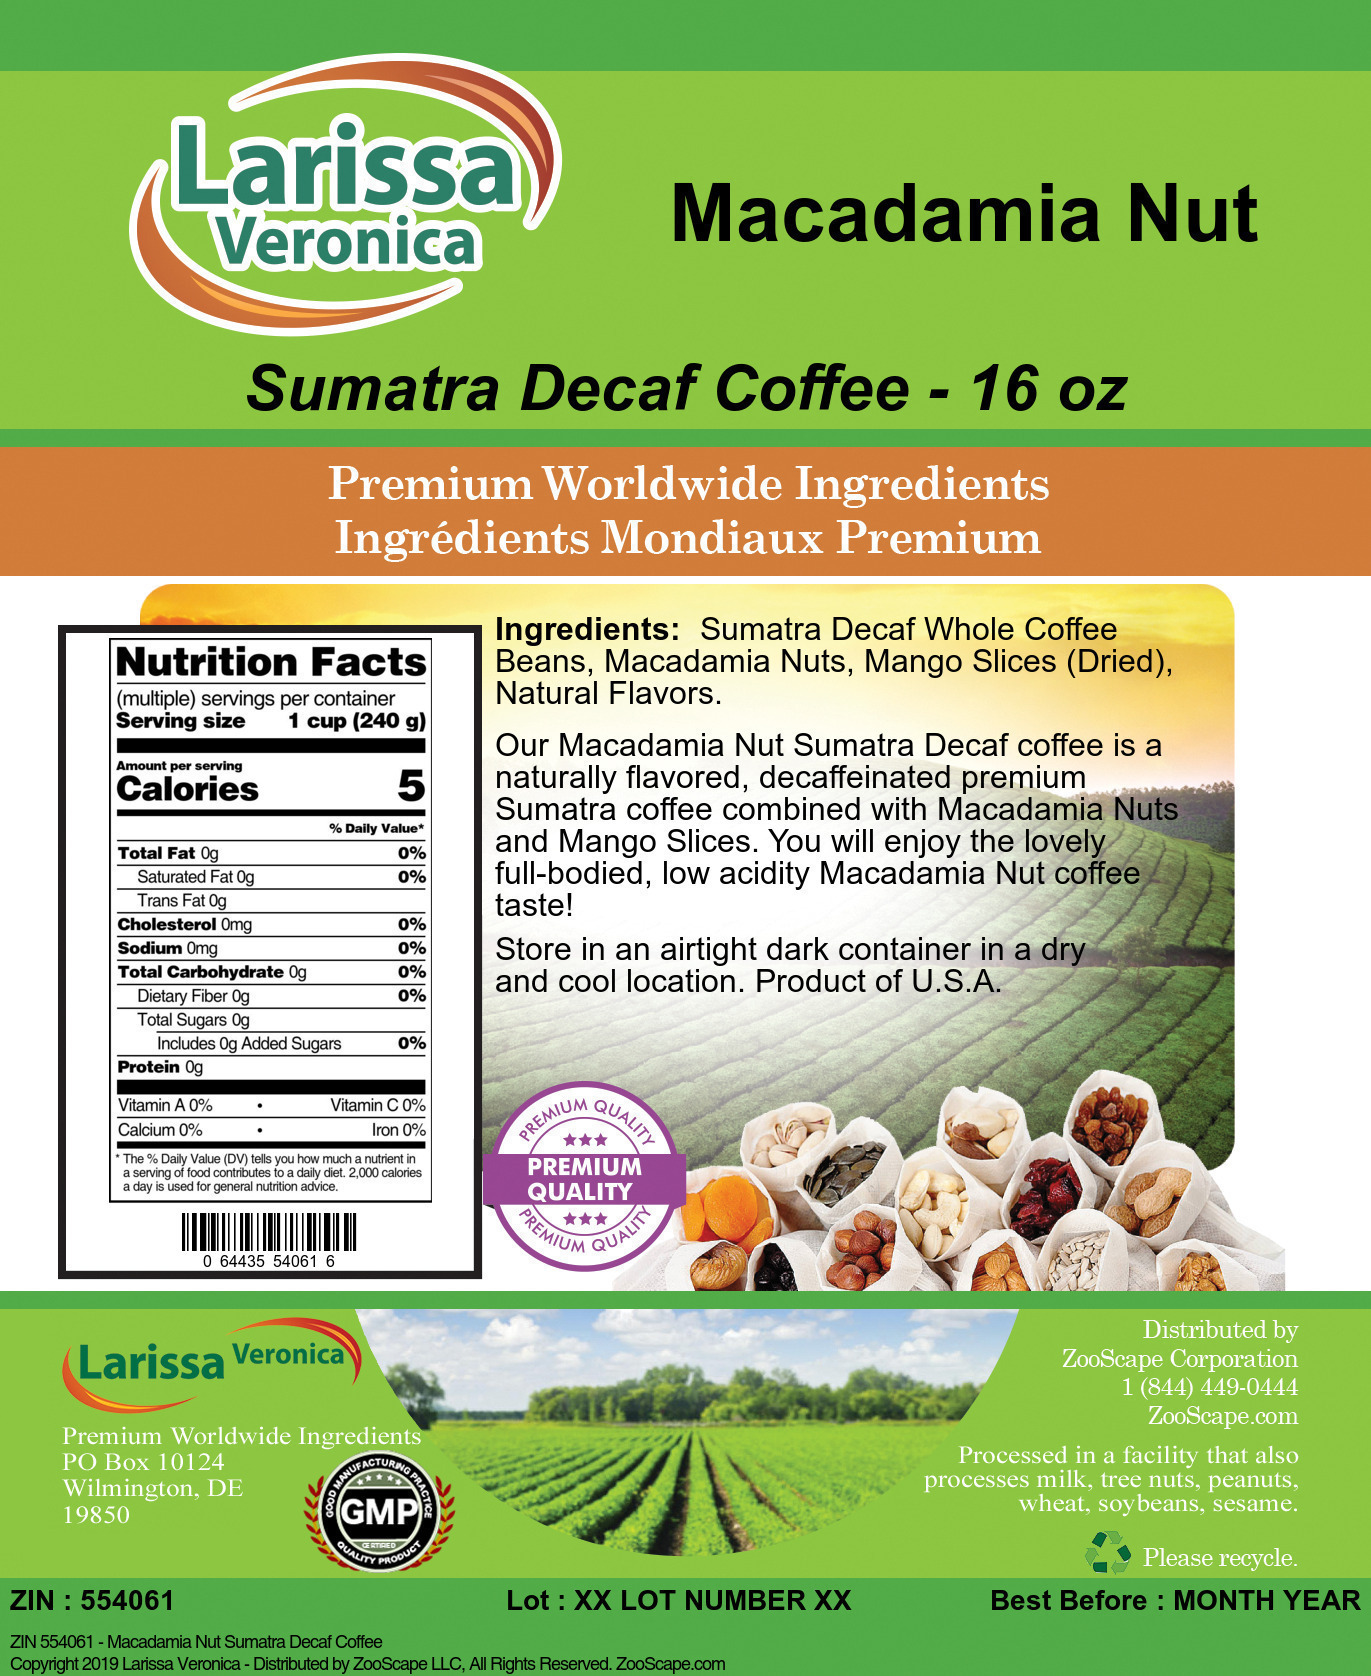 Macadamia Nut Sumatra Decaf Coffee - Label